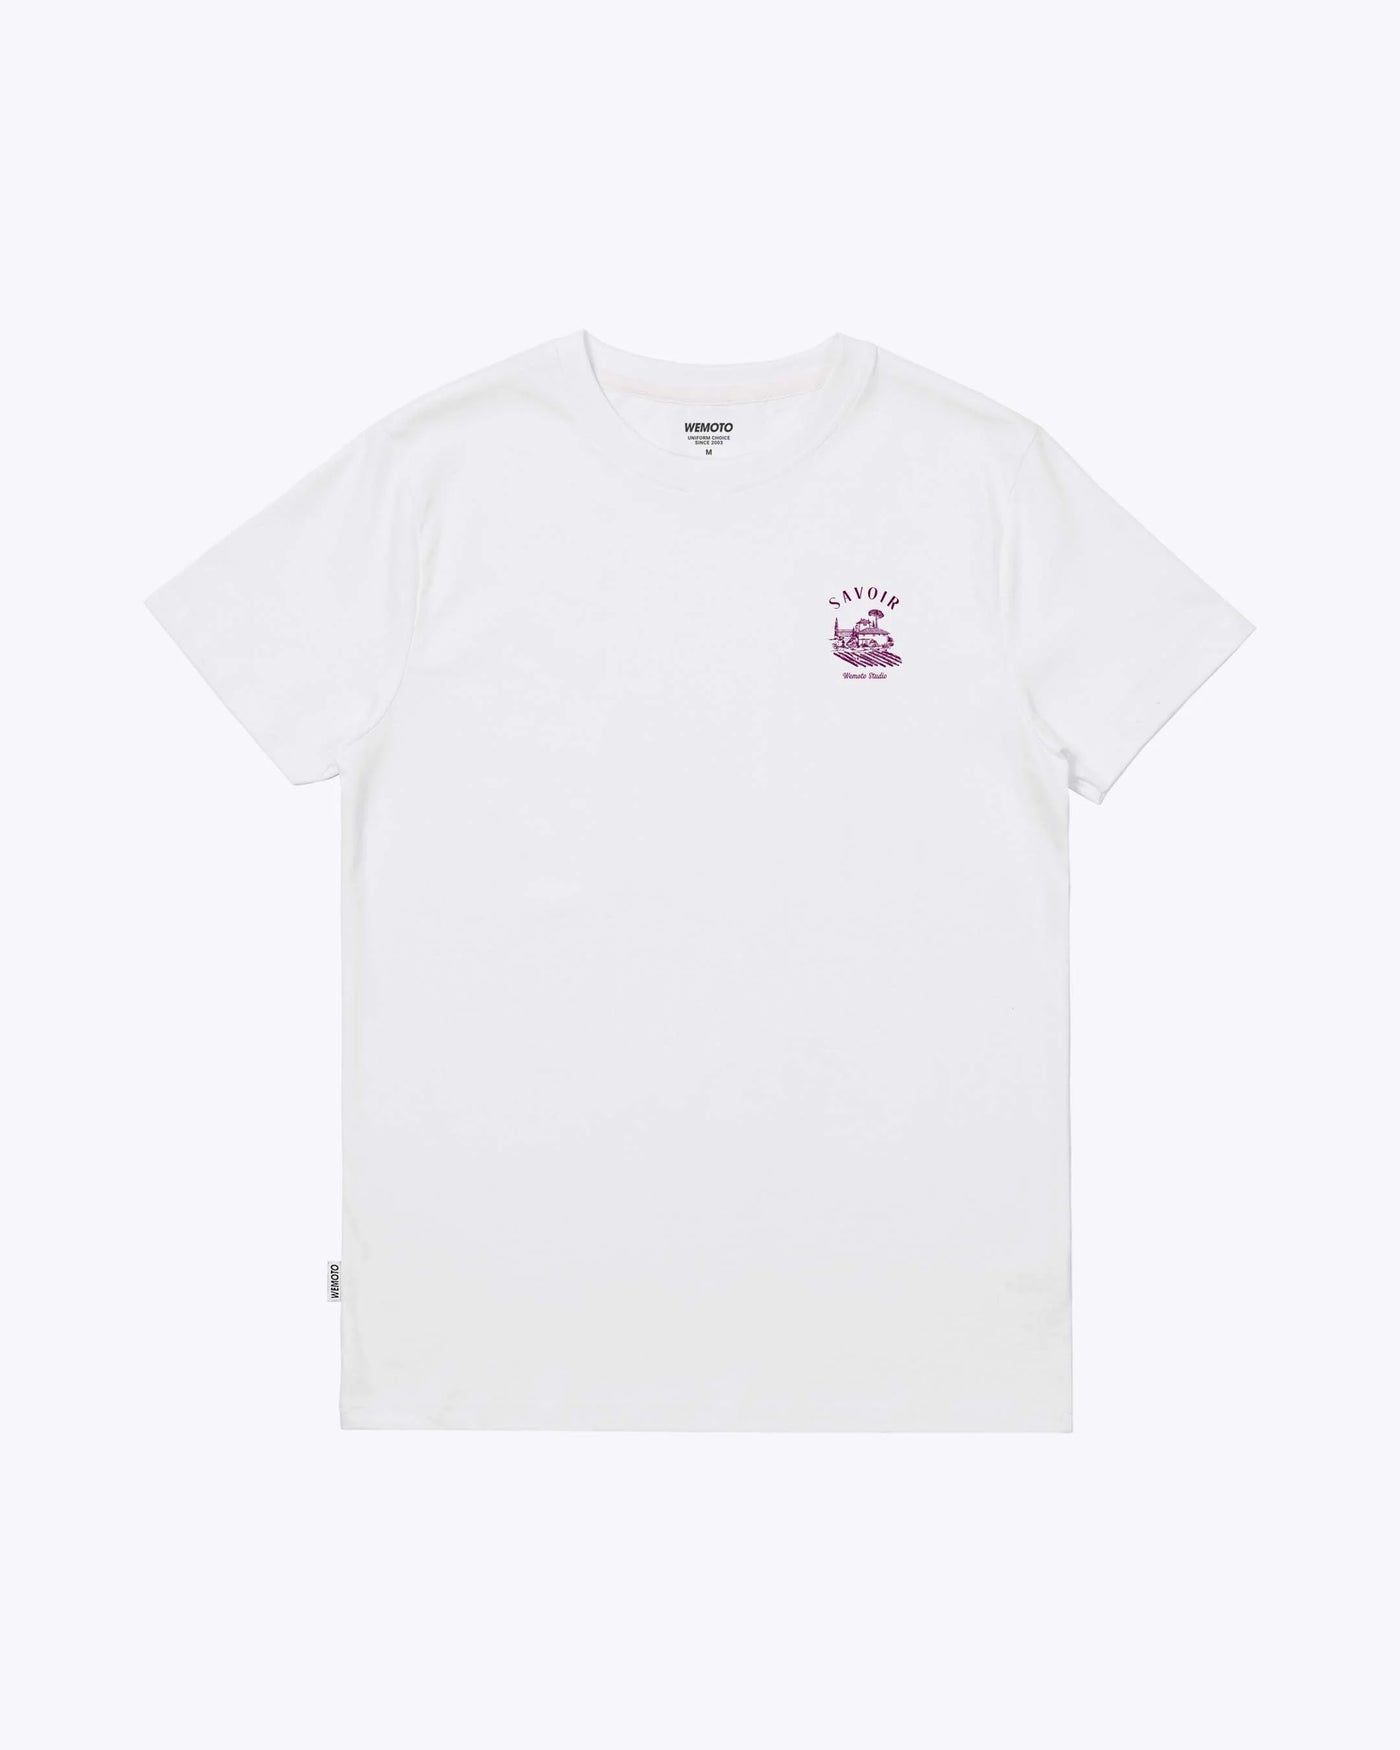 Wemoto Savoir T-Shirt White